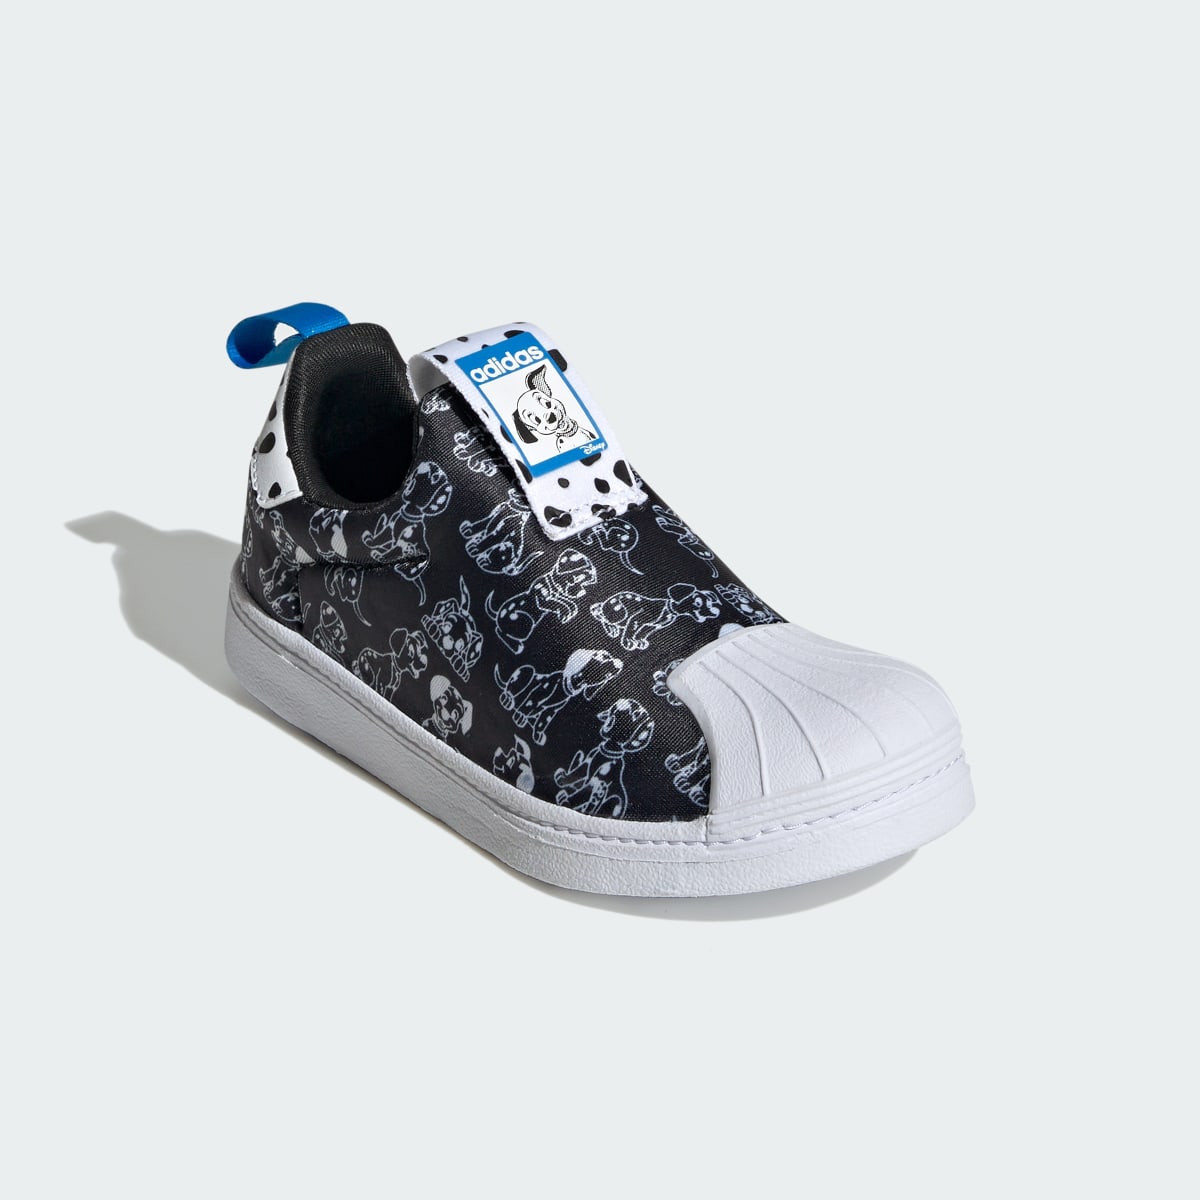 Adidas Originals x Disney 101 Dalmatians Superstar 360 Shoes Kids. 5